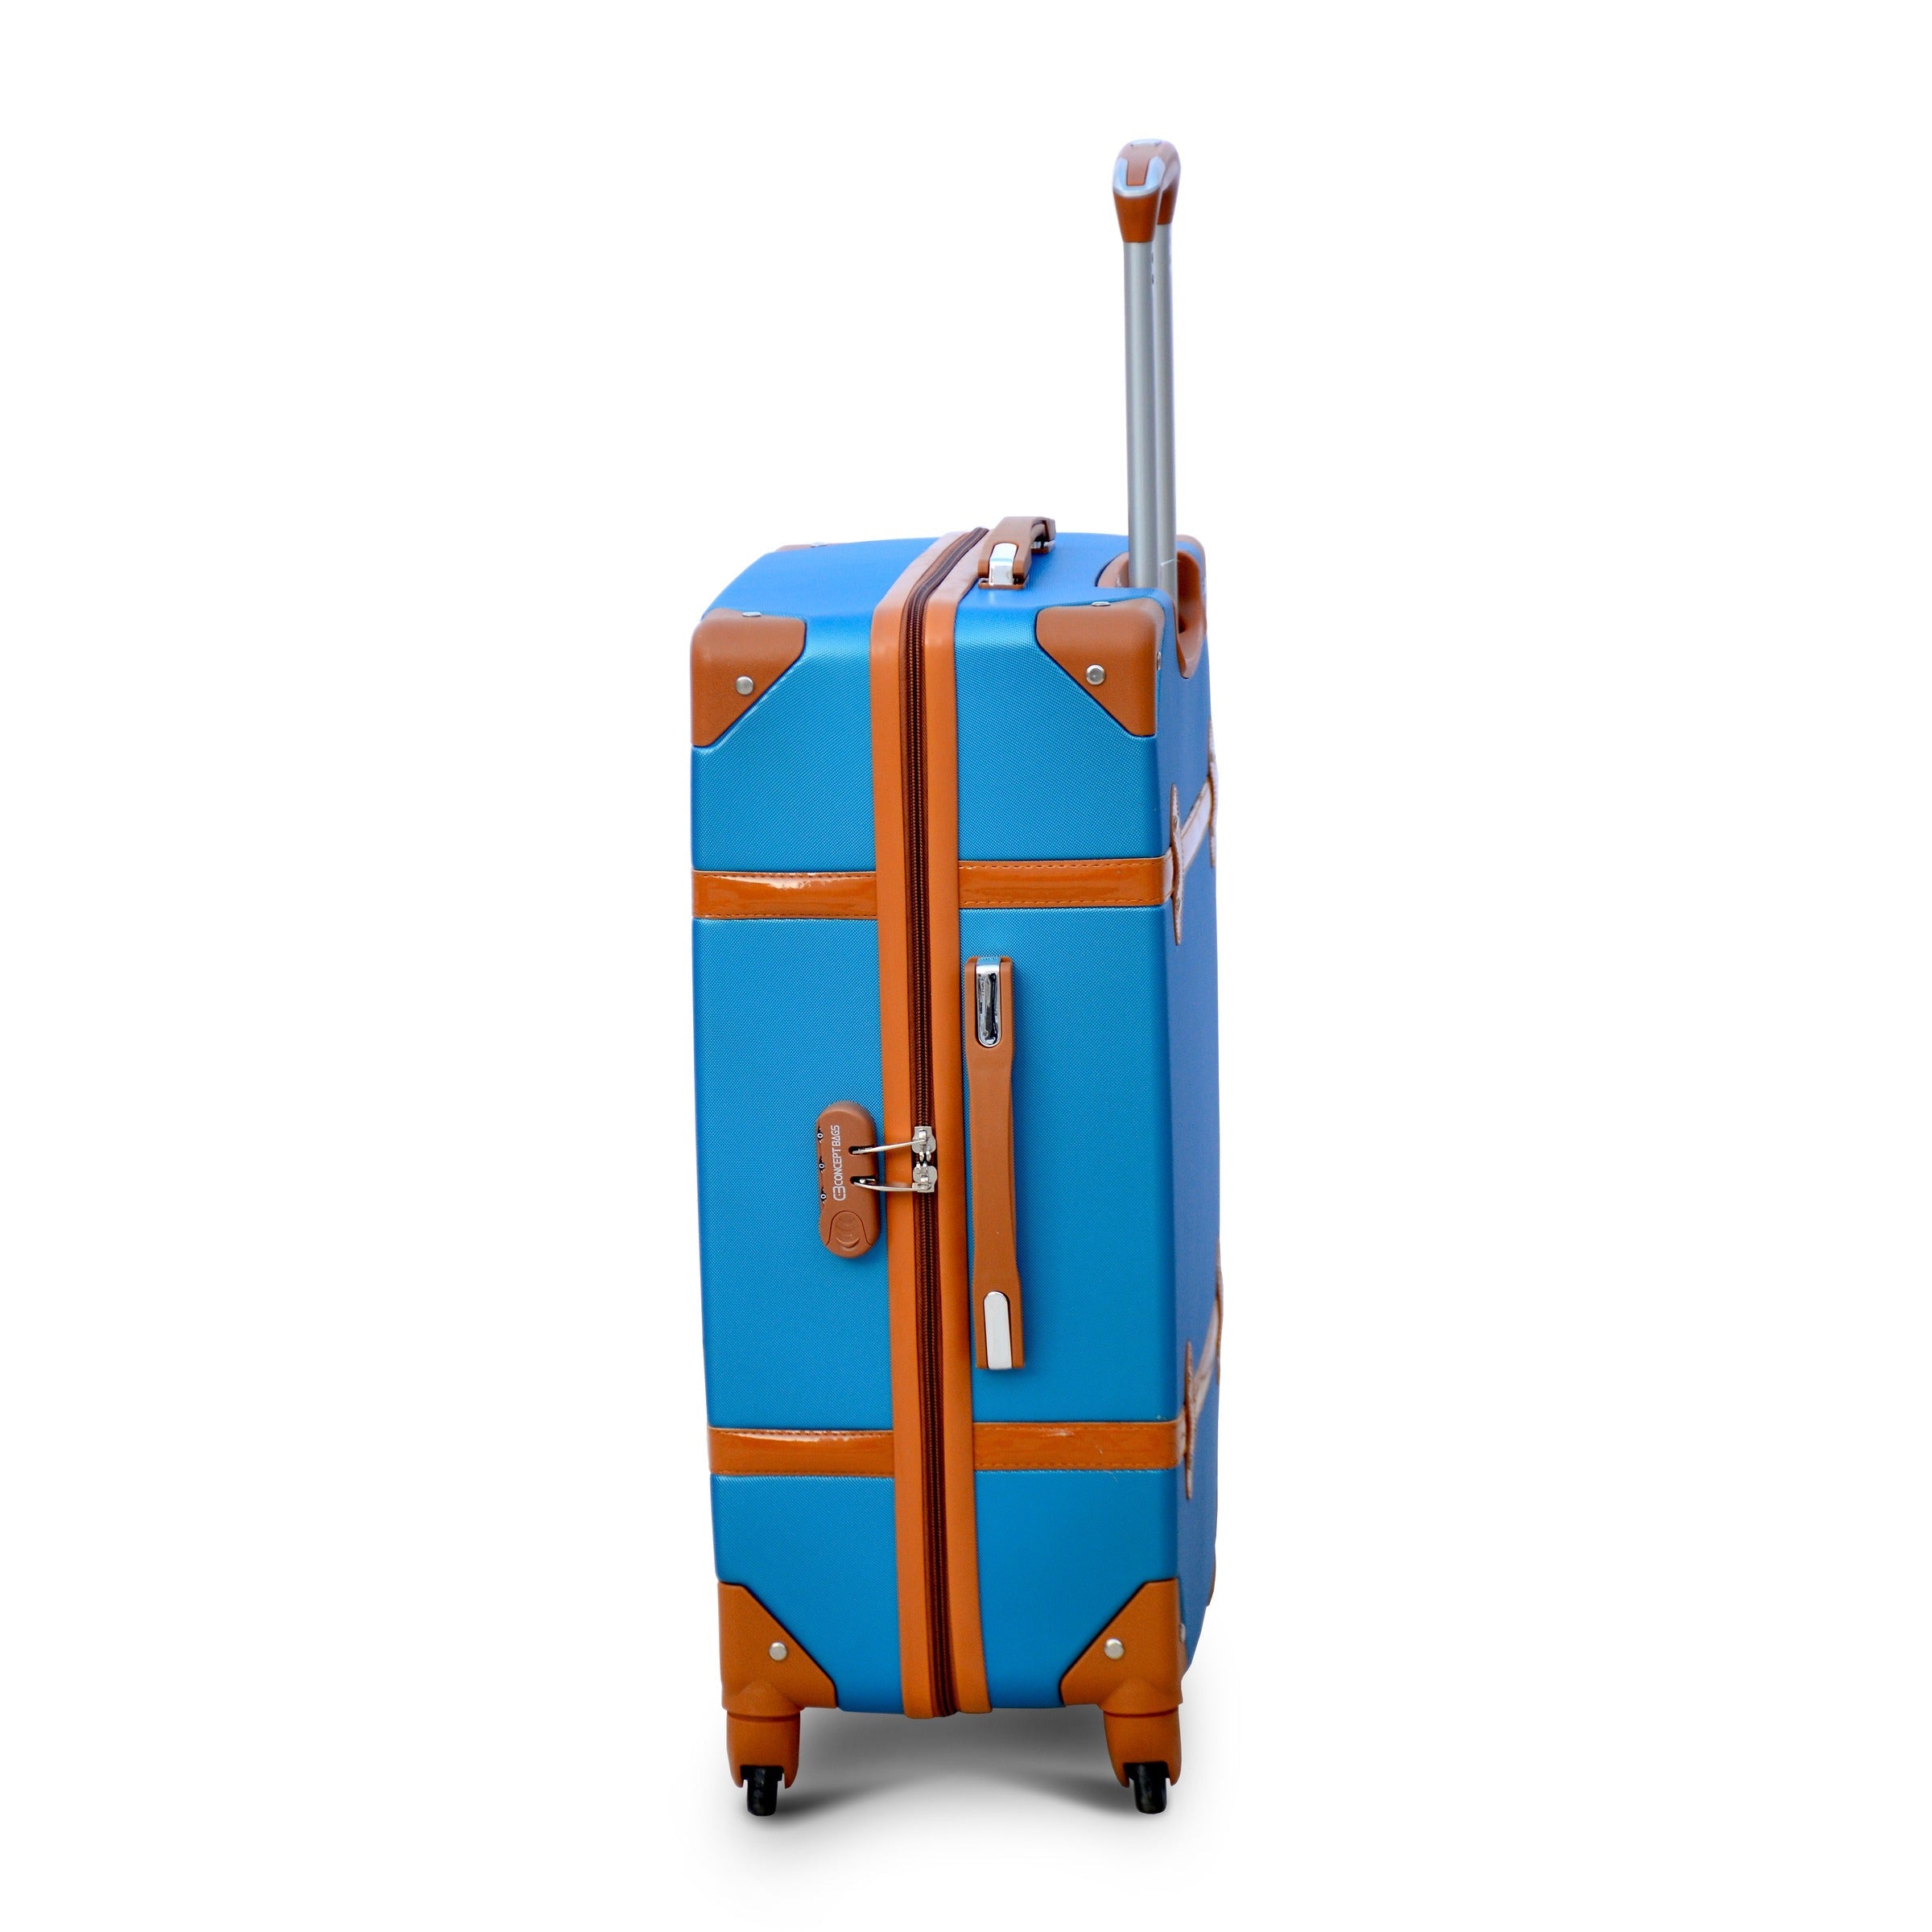 28" Blue Colour Lightweight Corner Guard ABS Luggage Hard Case Trolley Bag